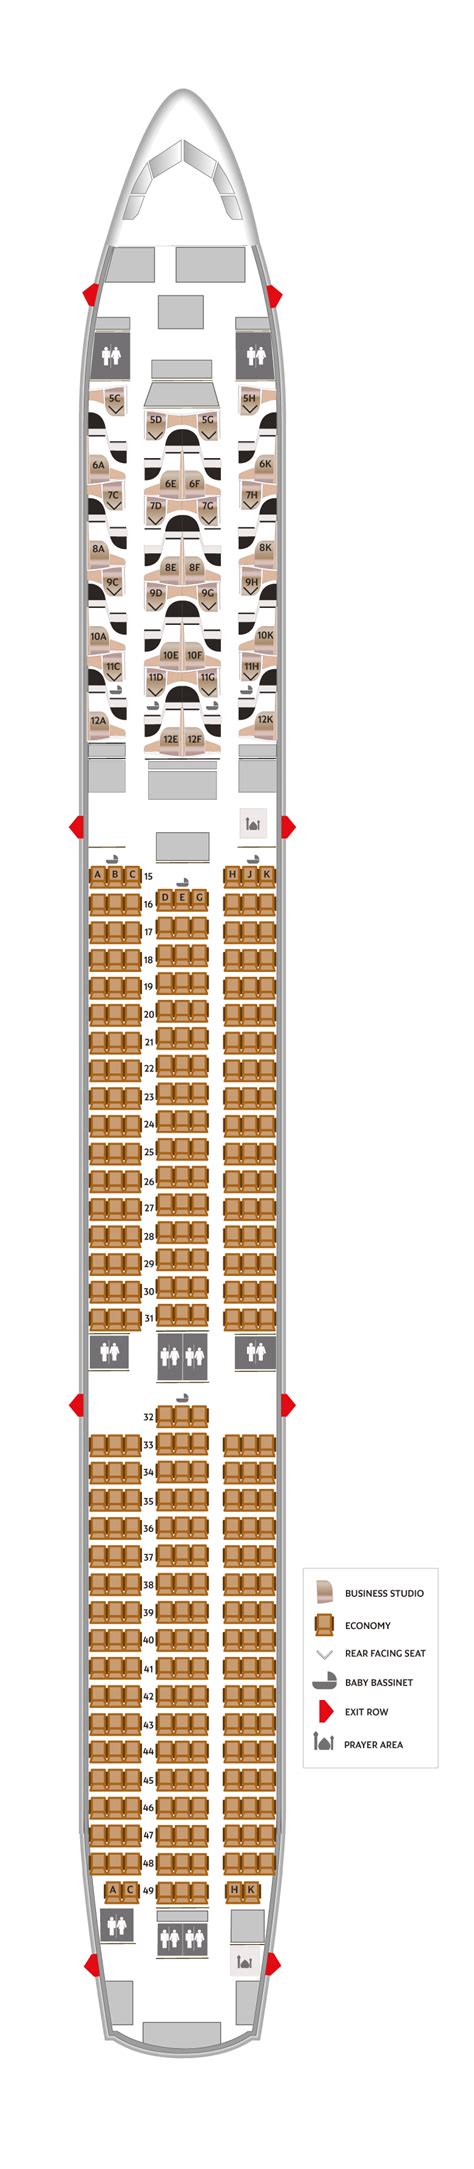 boeing 787-10 dreamliner seating chart